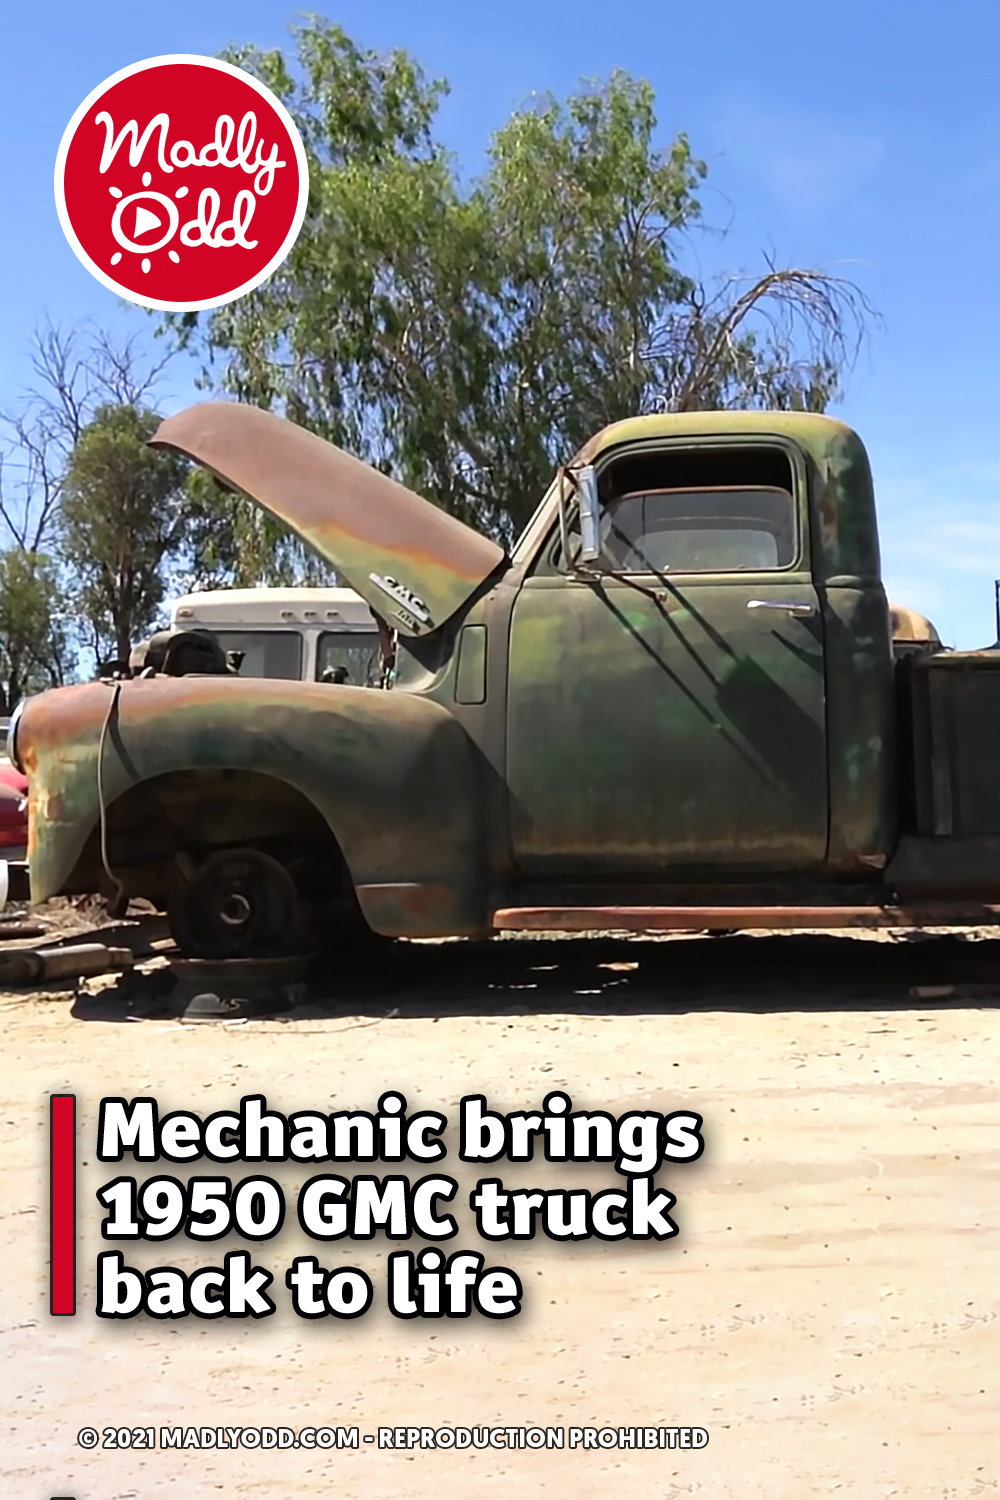 Mechanic brings 1950 GMC truck back to life